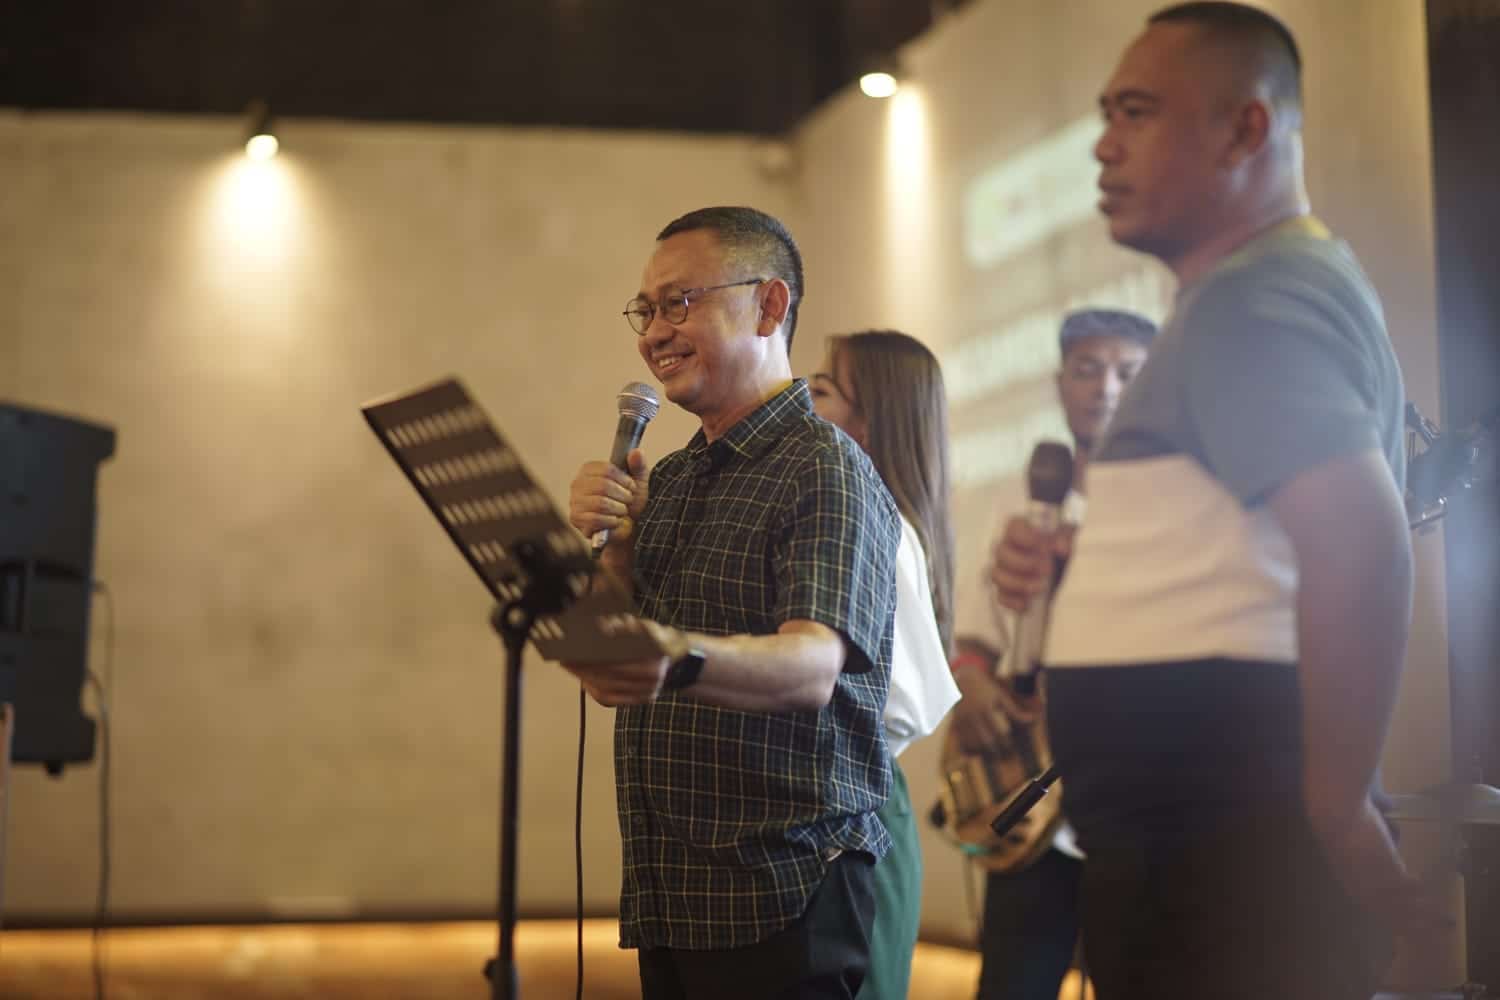 Wali Kota Pontianak, Edi Rusdi Kamtono dan Ketua DPRD Kota Pontianak, Satarudin turut menyanyi pada acara Ngamen Amal Peduli Stunting. (Foto: Prokopim For KalbarOnline.com)